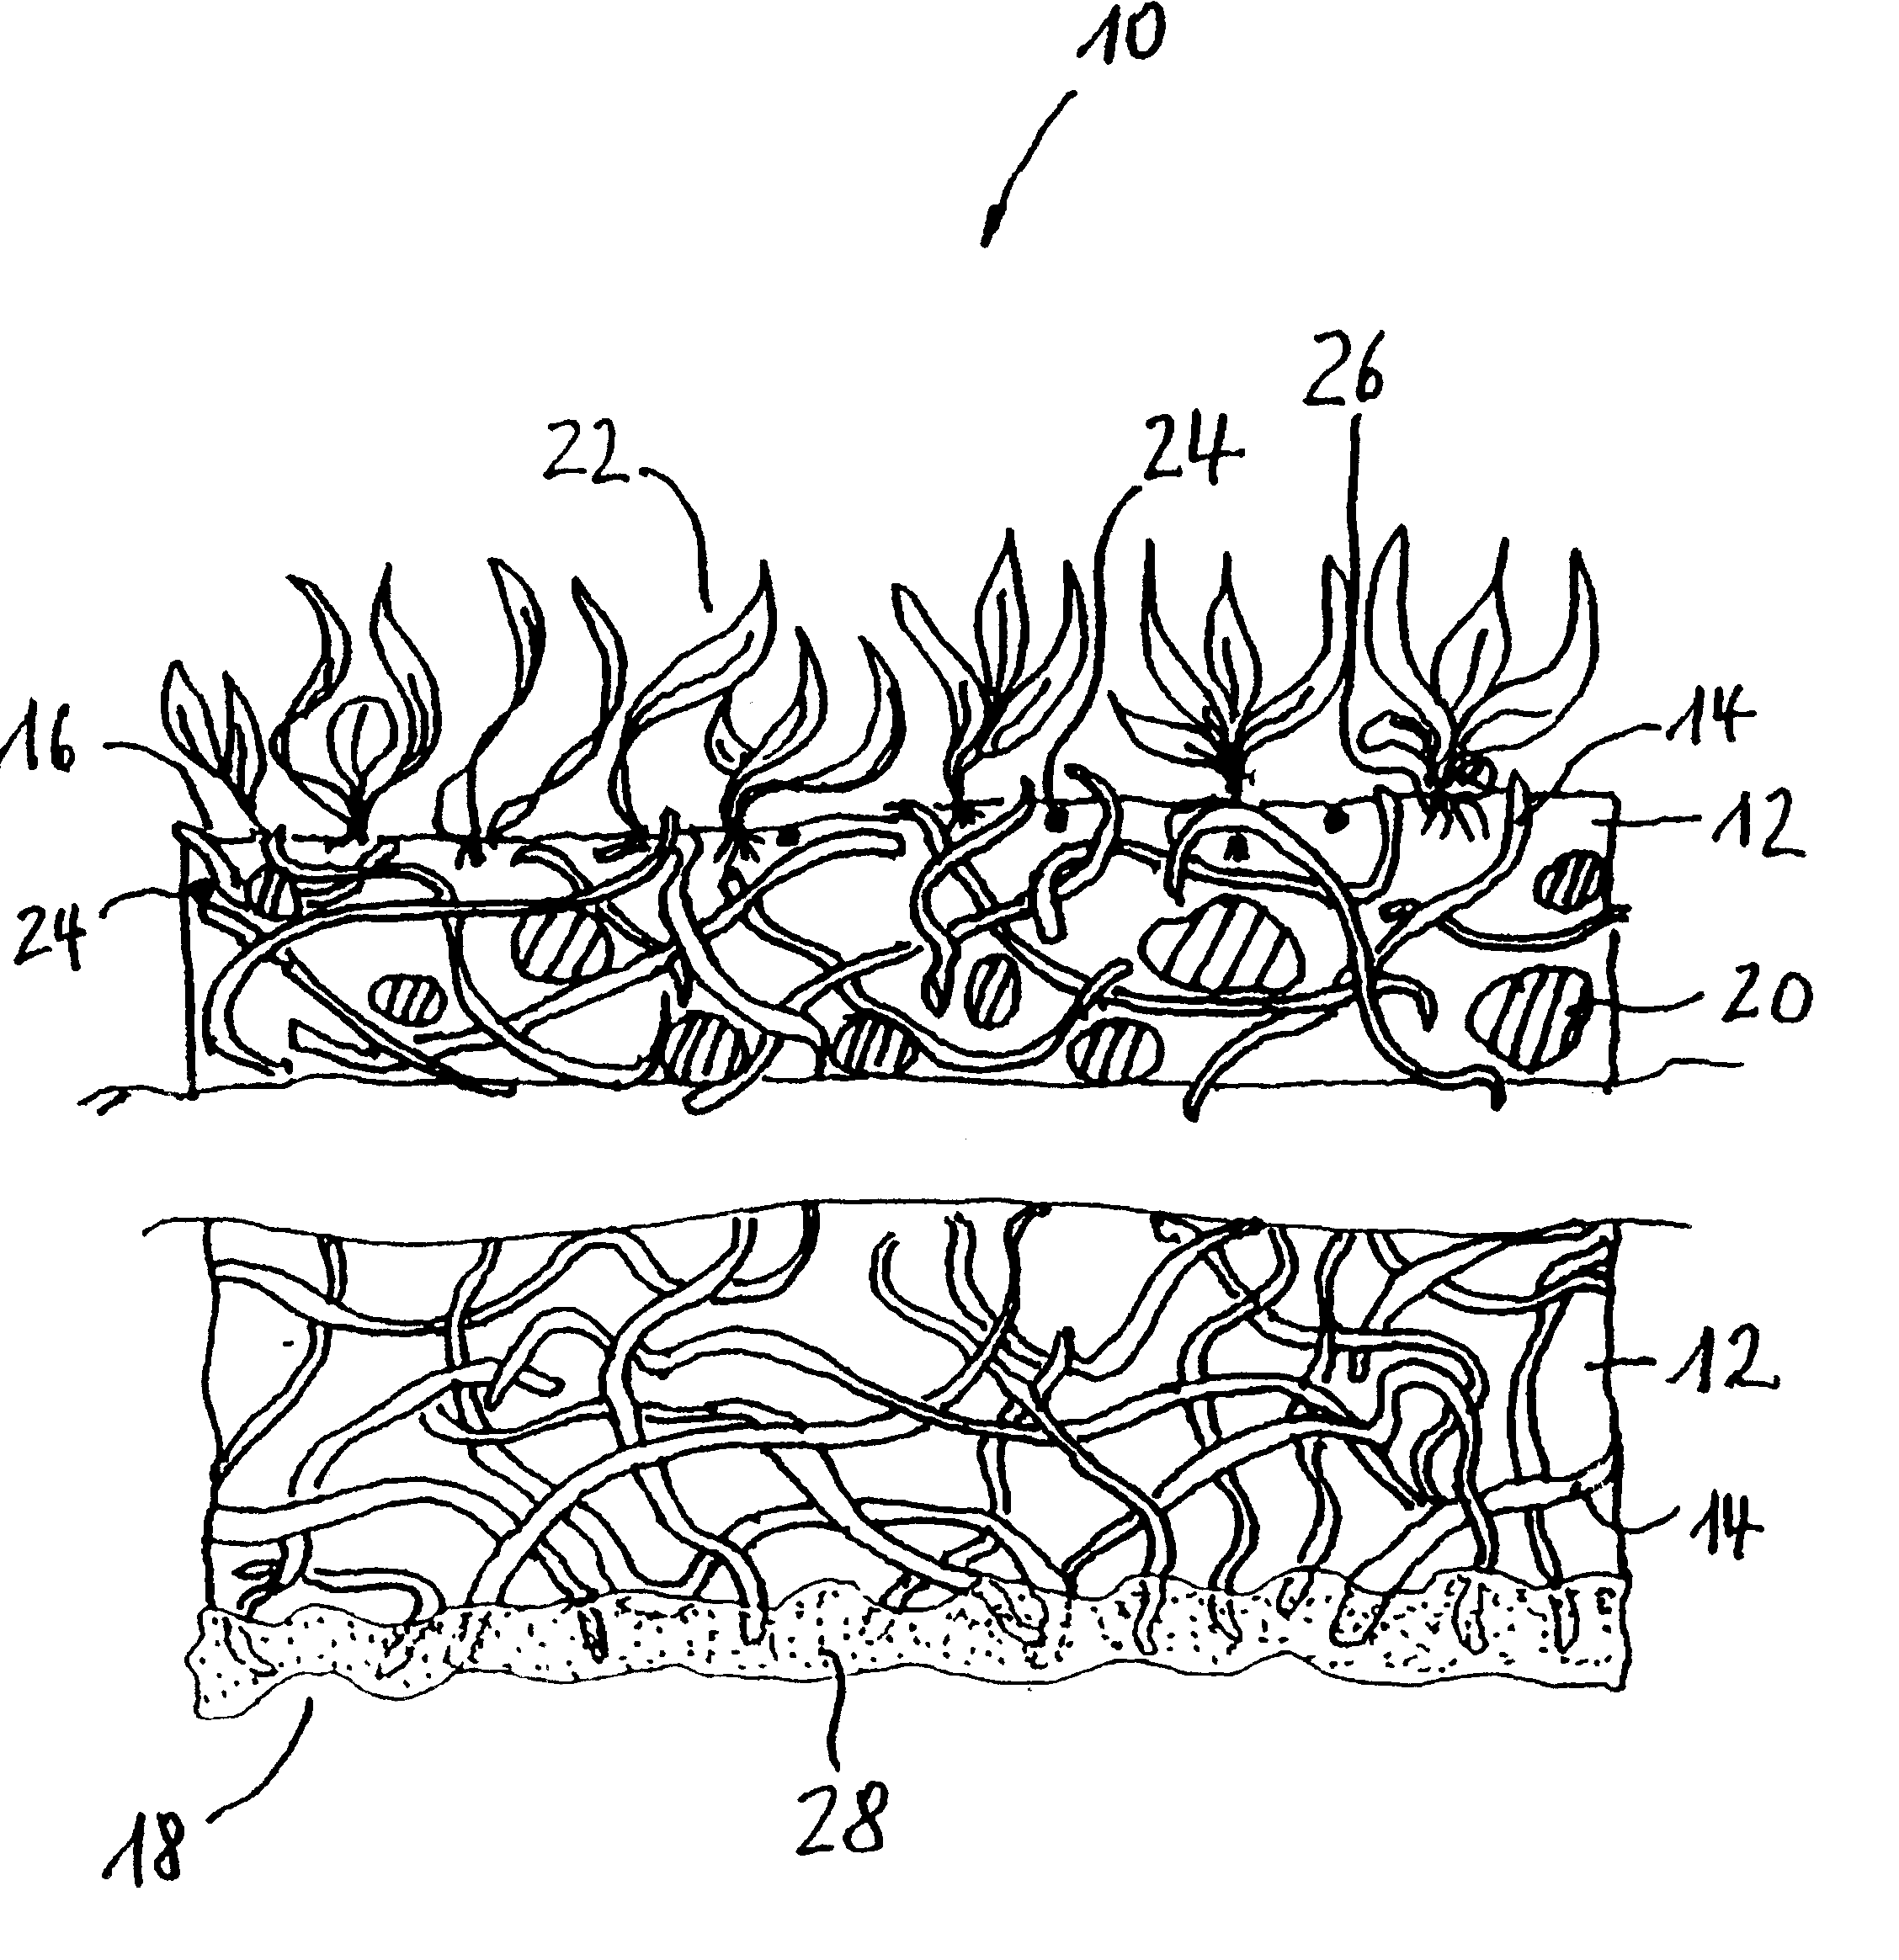 Vegetation support consisting of a mat of entangled organic fibers